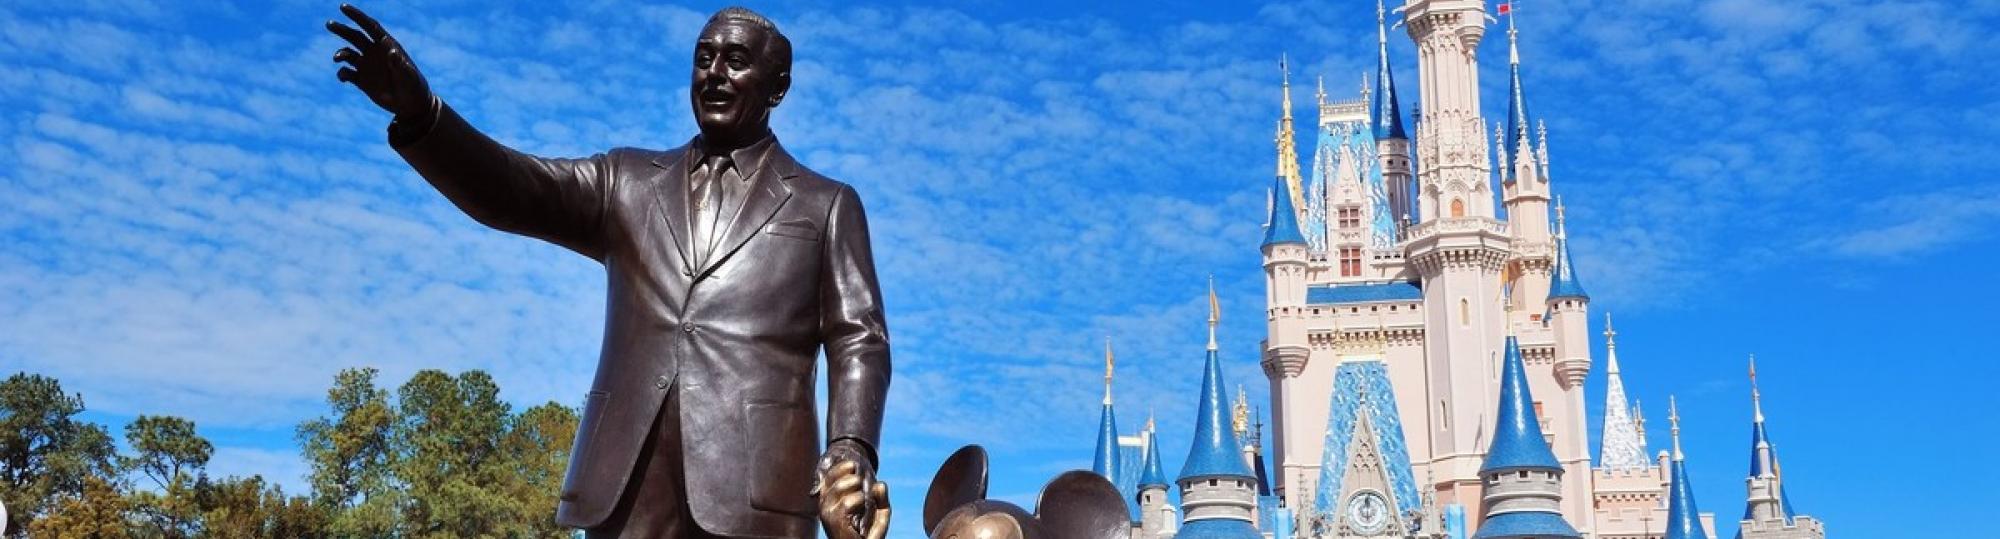 Walt Disney World Florida Military Discount With Veterans Advantage